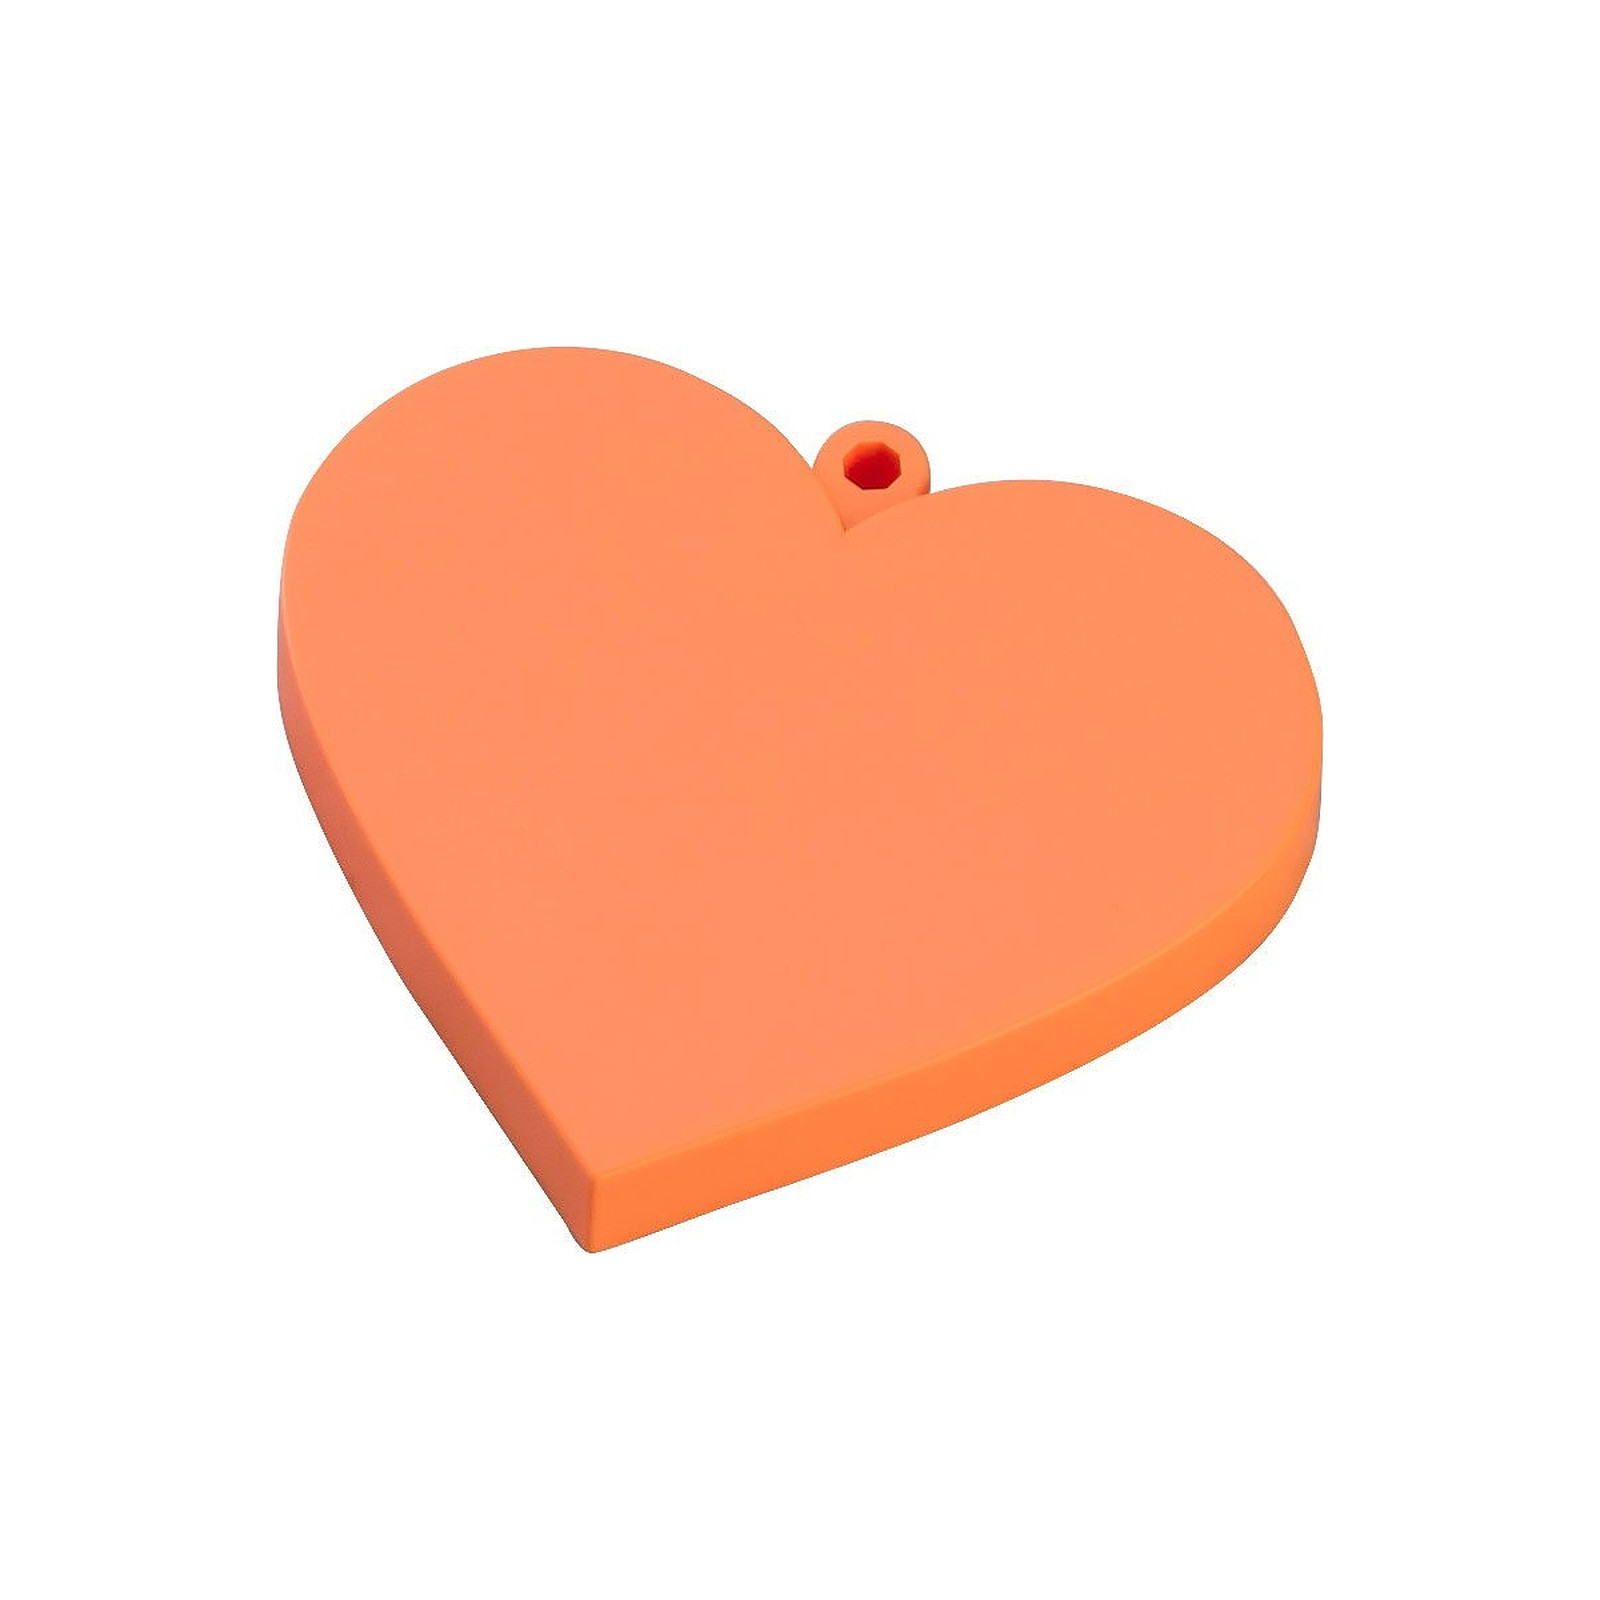 Nendoroid More - Socle pour figurines Nendoroid Heart Orange Version - Figurines Good Smile Company